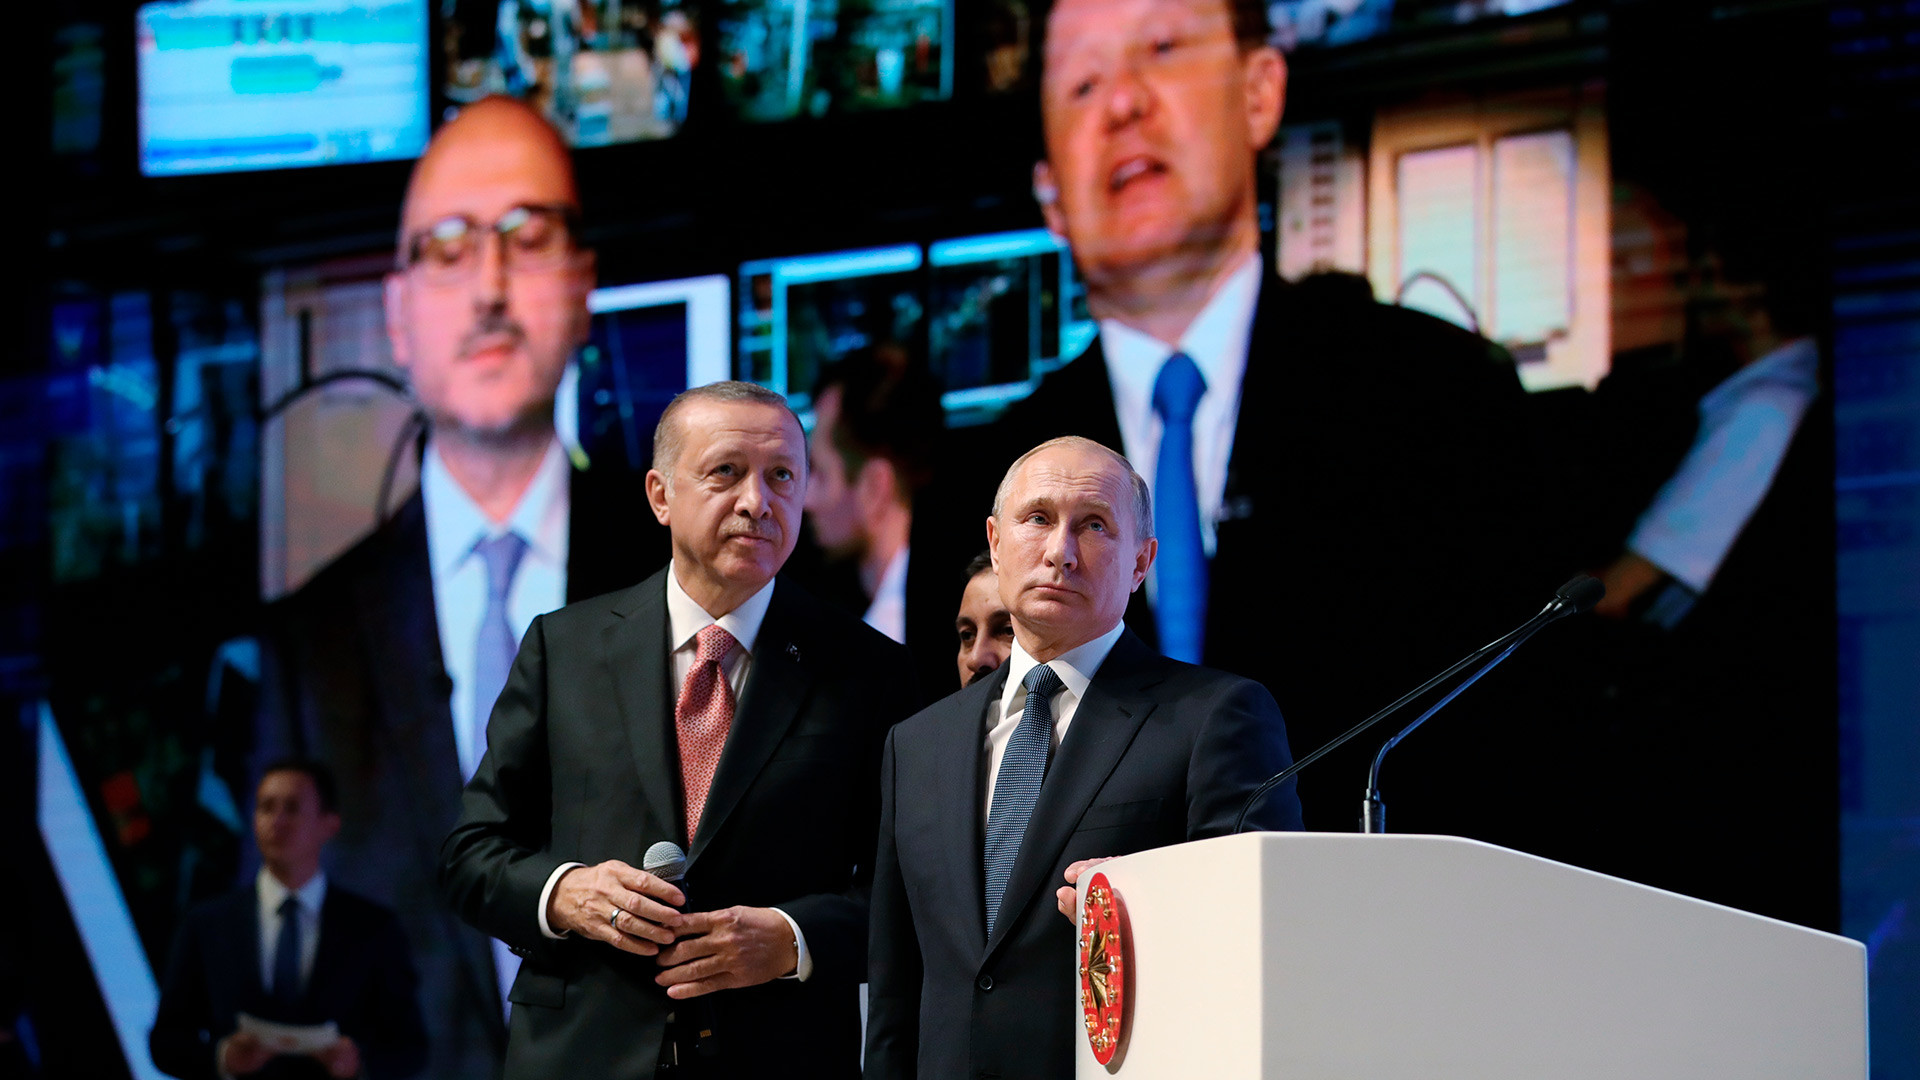 Vladimir Putin and Recep Tayyip Erdogan at the grand opening ceremony. 